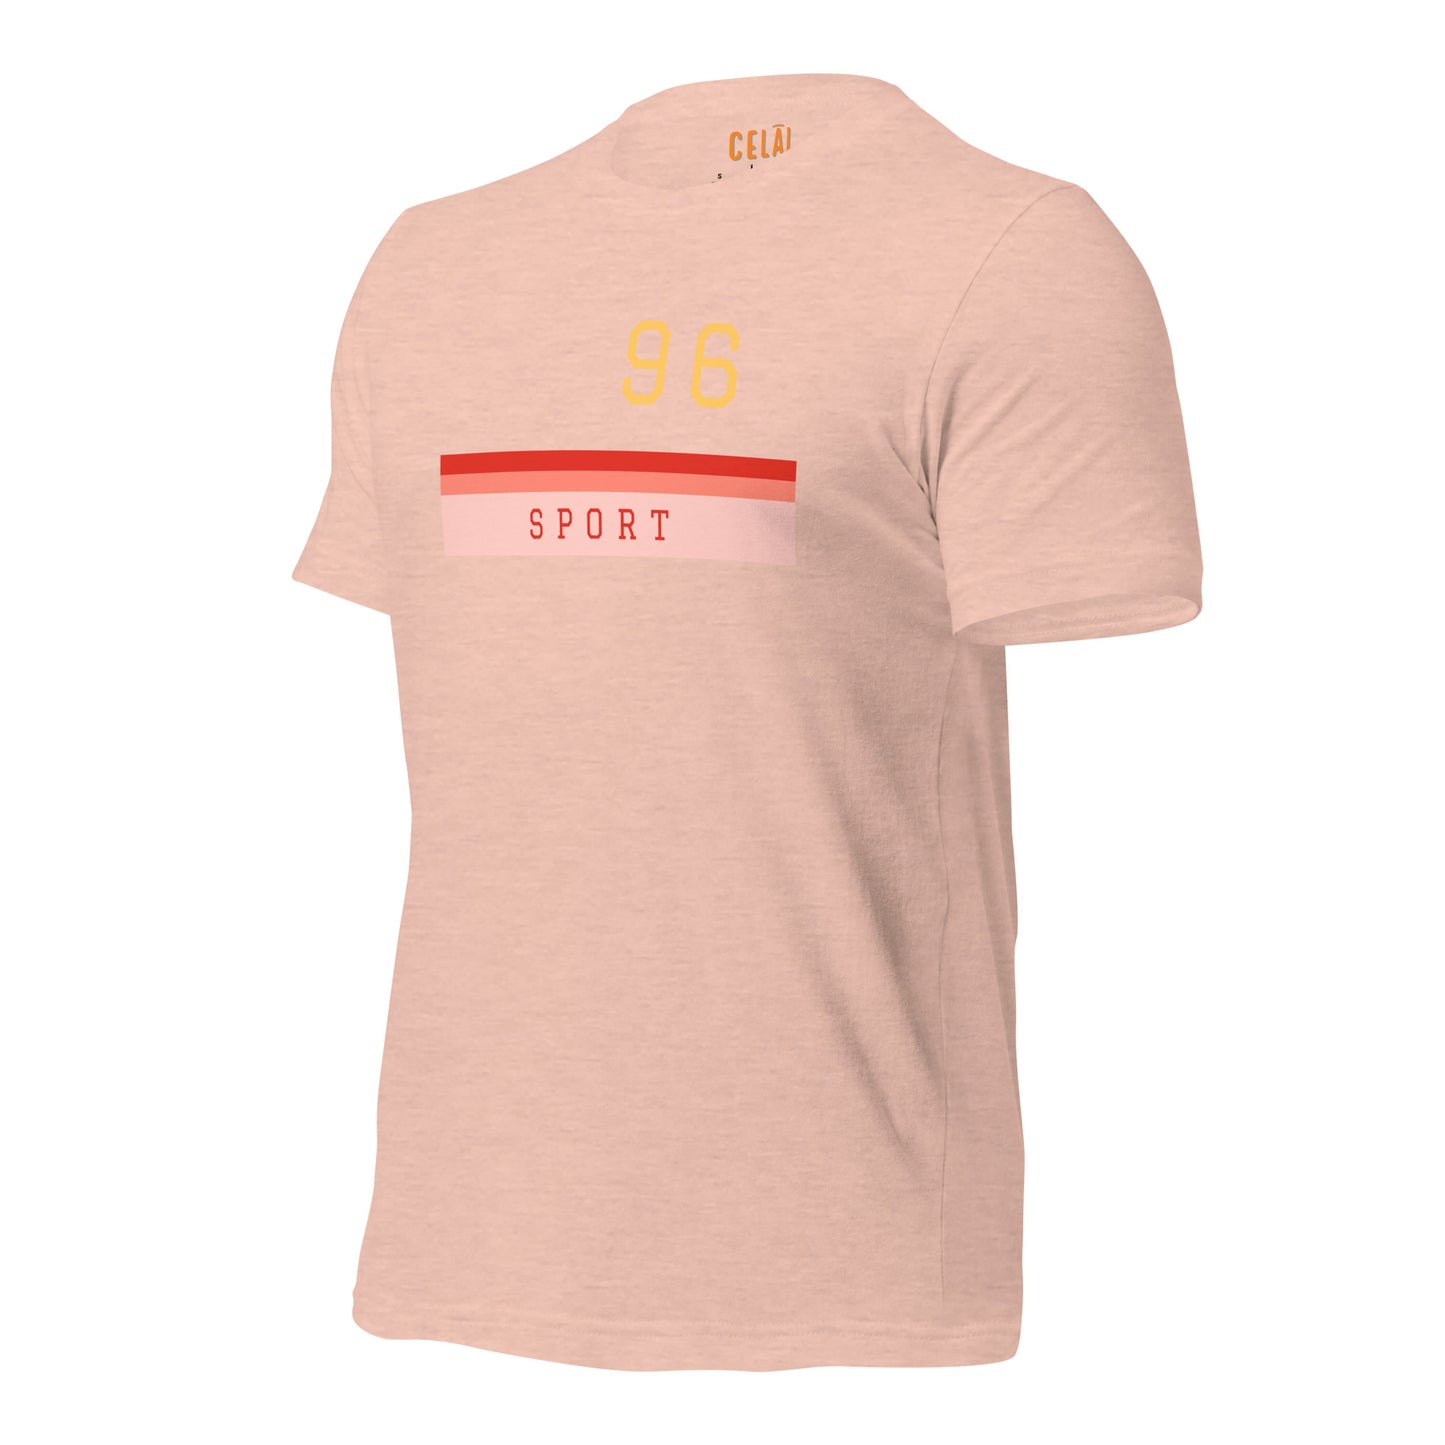 96 Unisex t-shirt